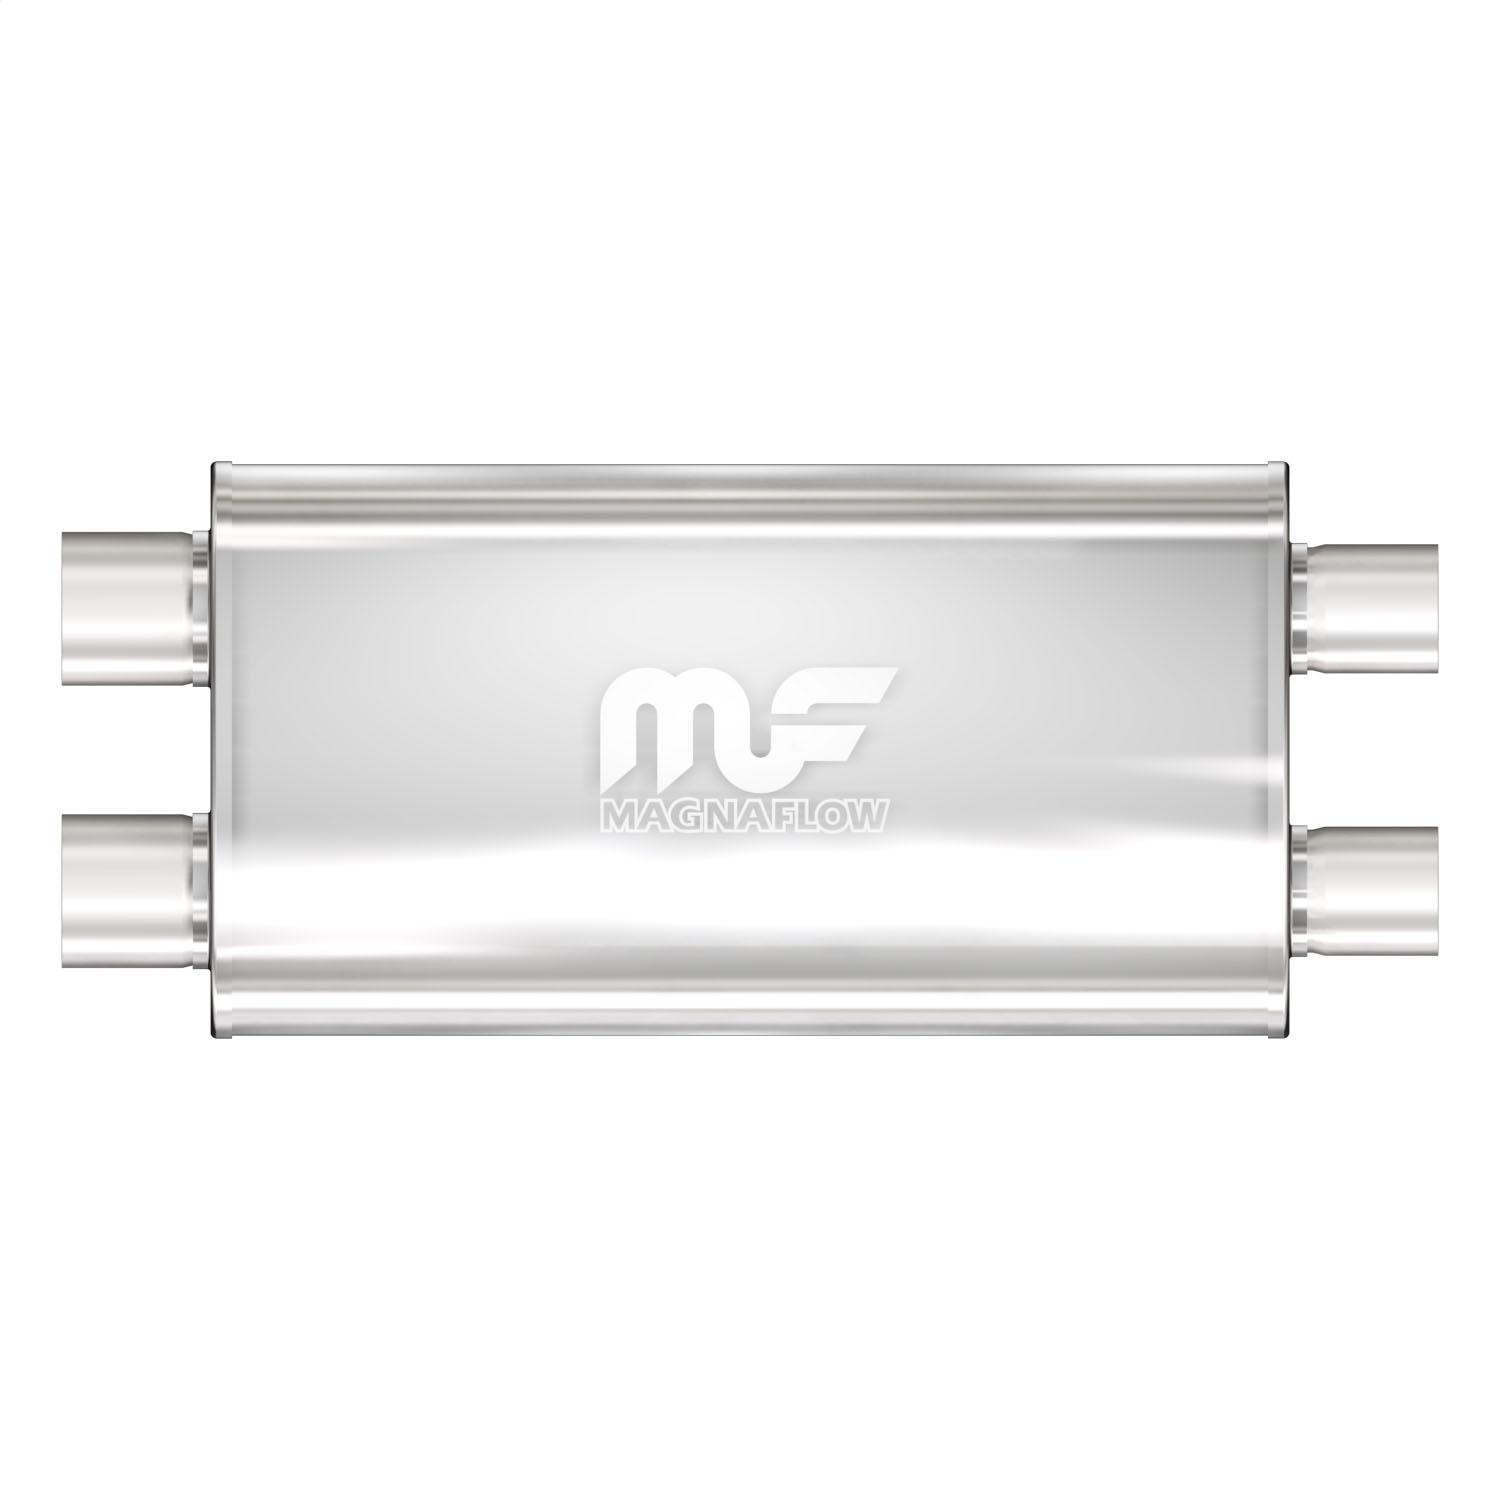 Magnaflow Performance Exhaust Magnaflow Performance Exhaust 14568 Stainless Steel Muffler